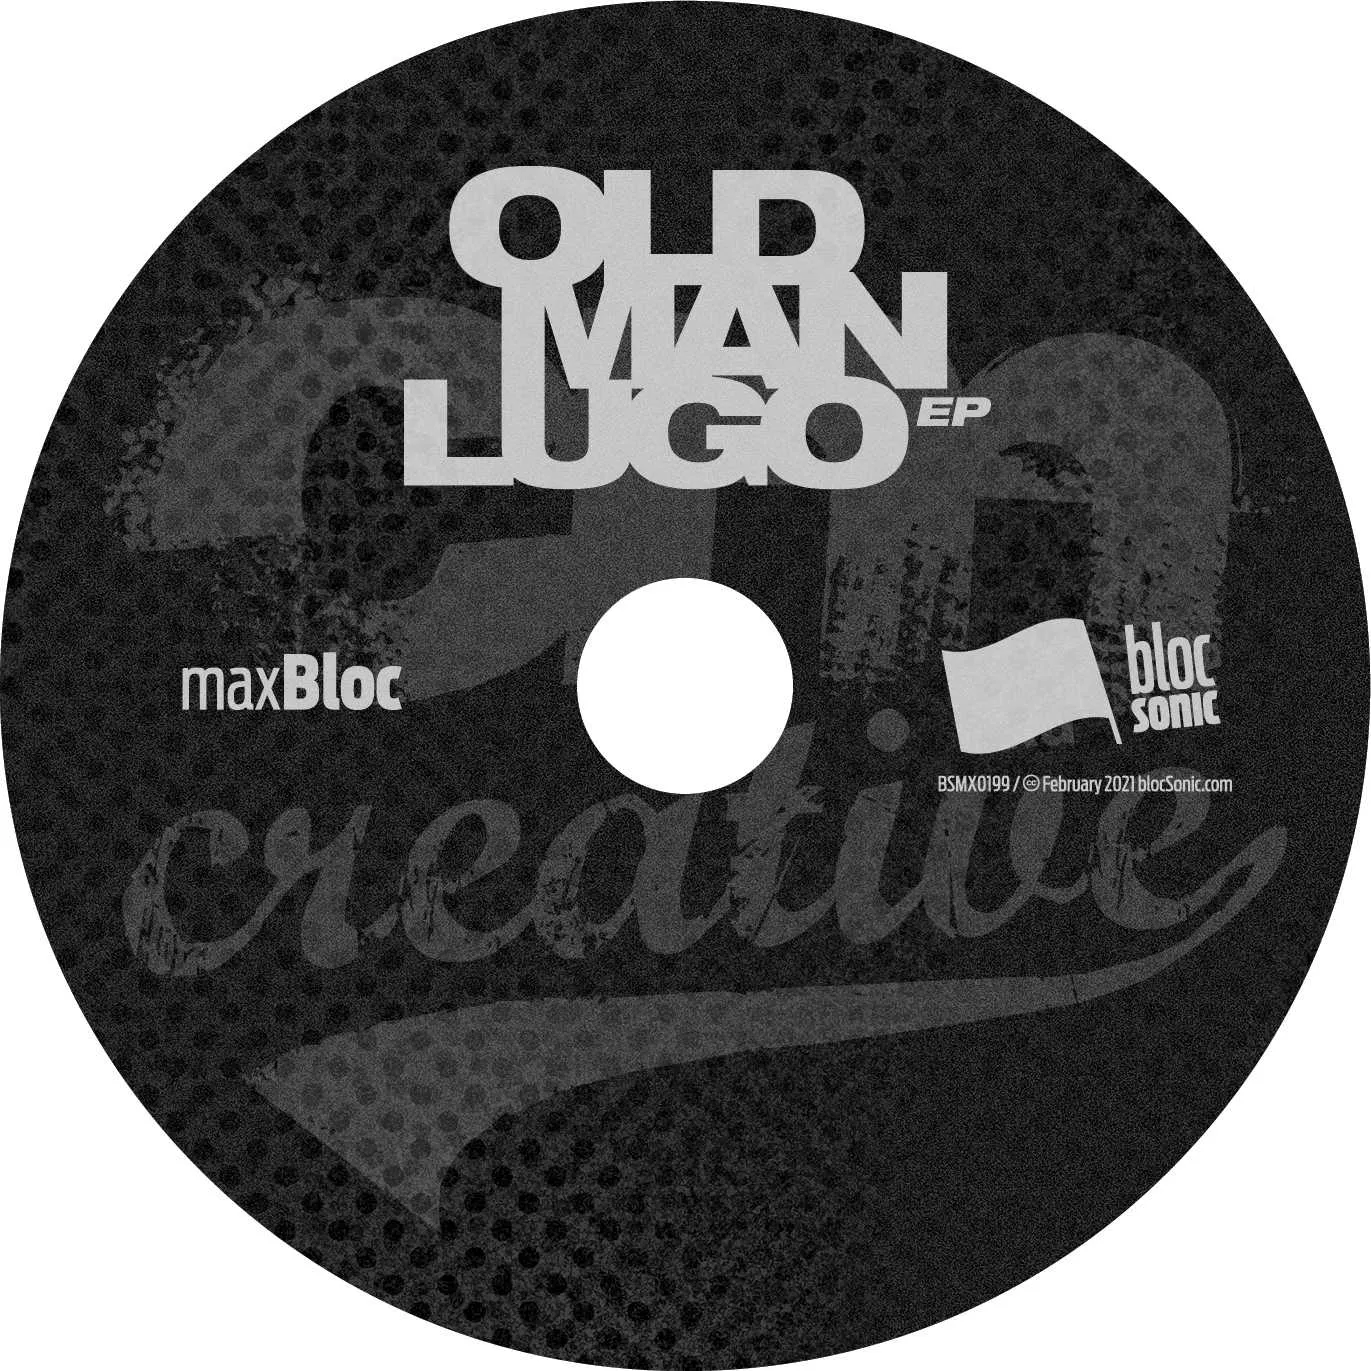 Album disc for “Old Man Lugo EP” by CM aka Creative